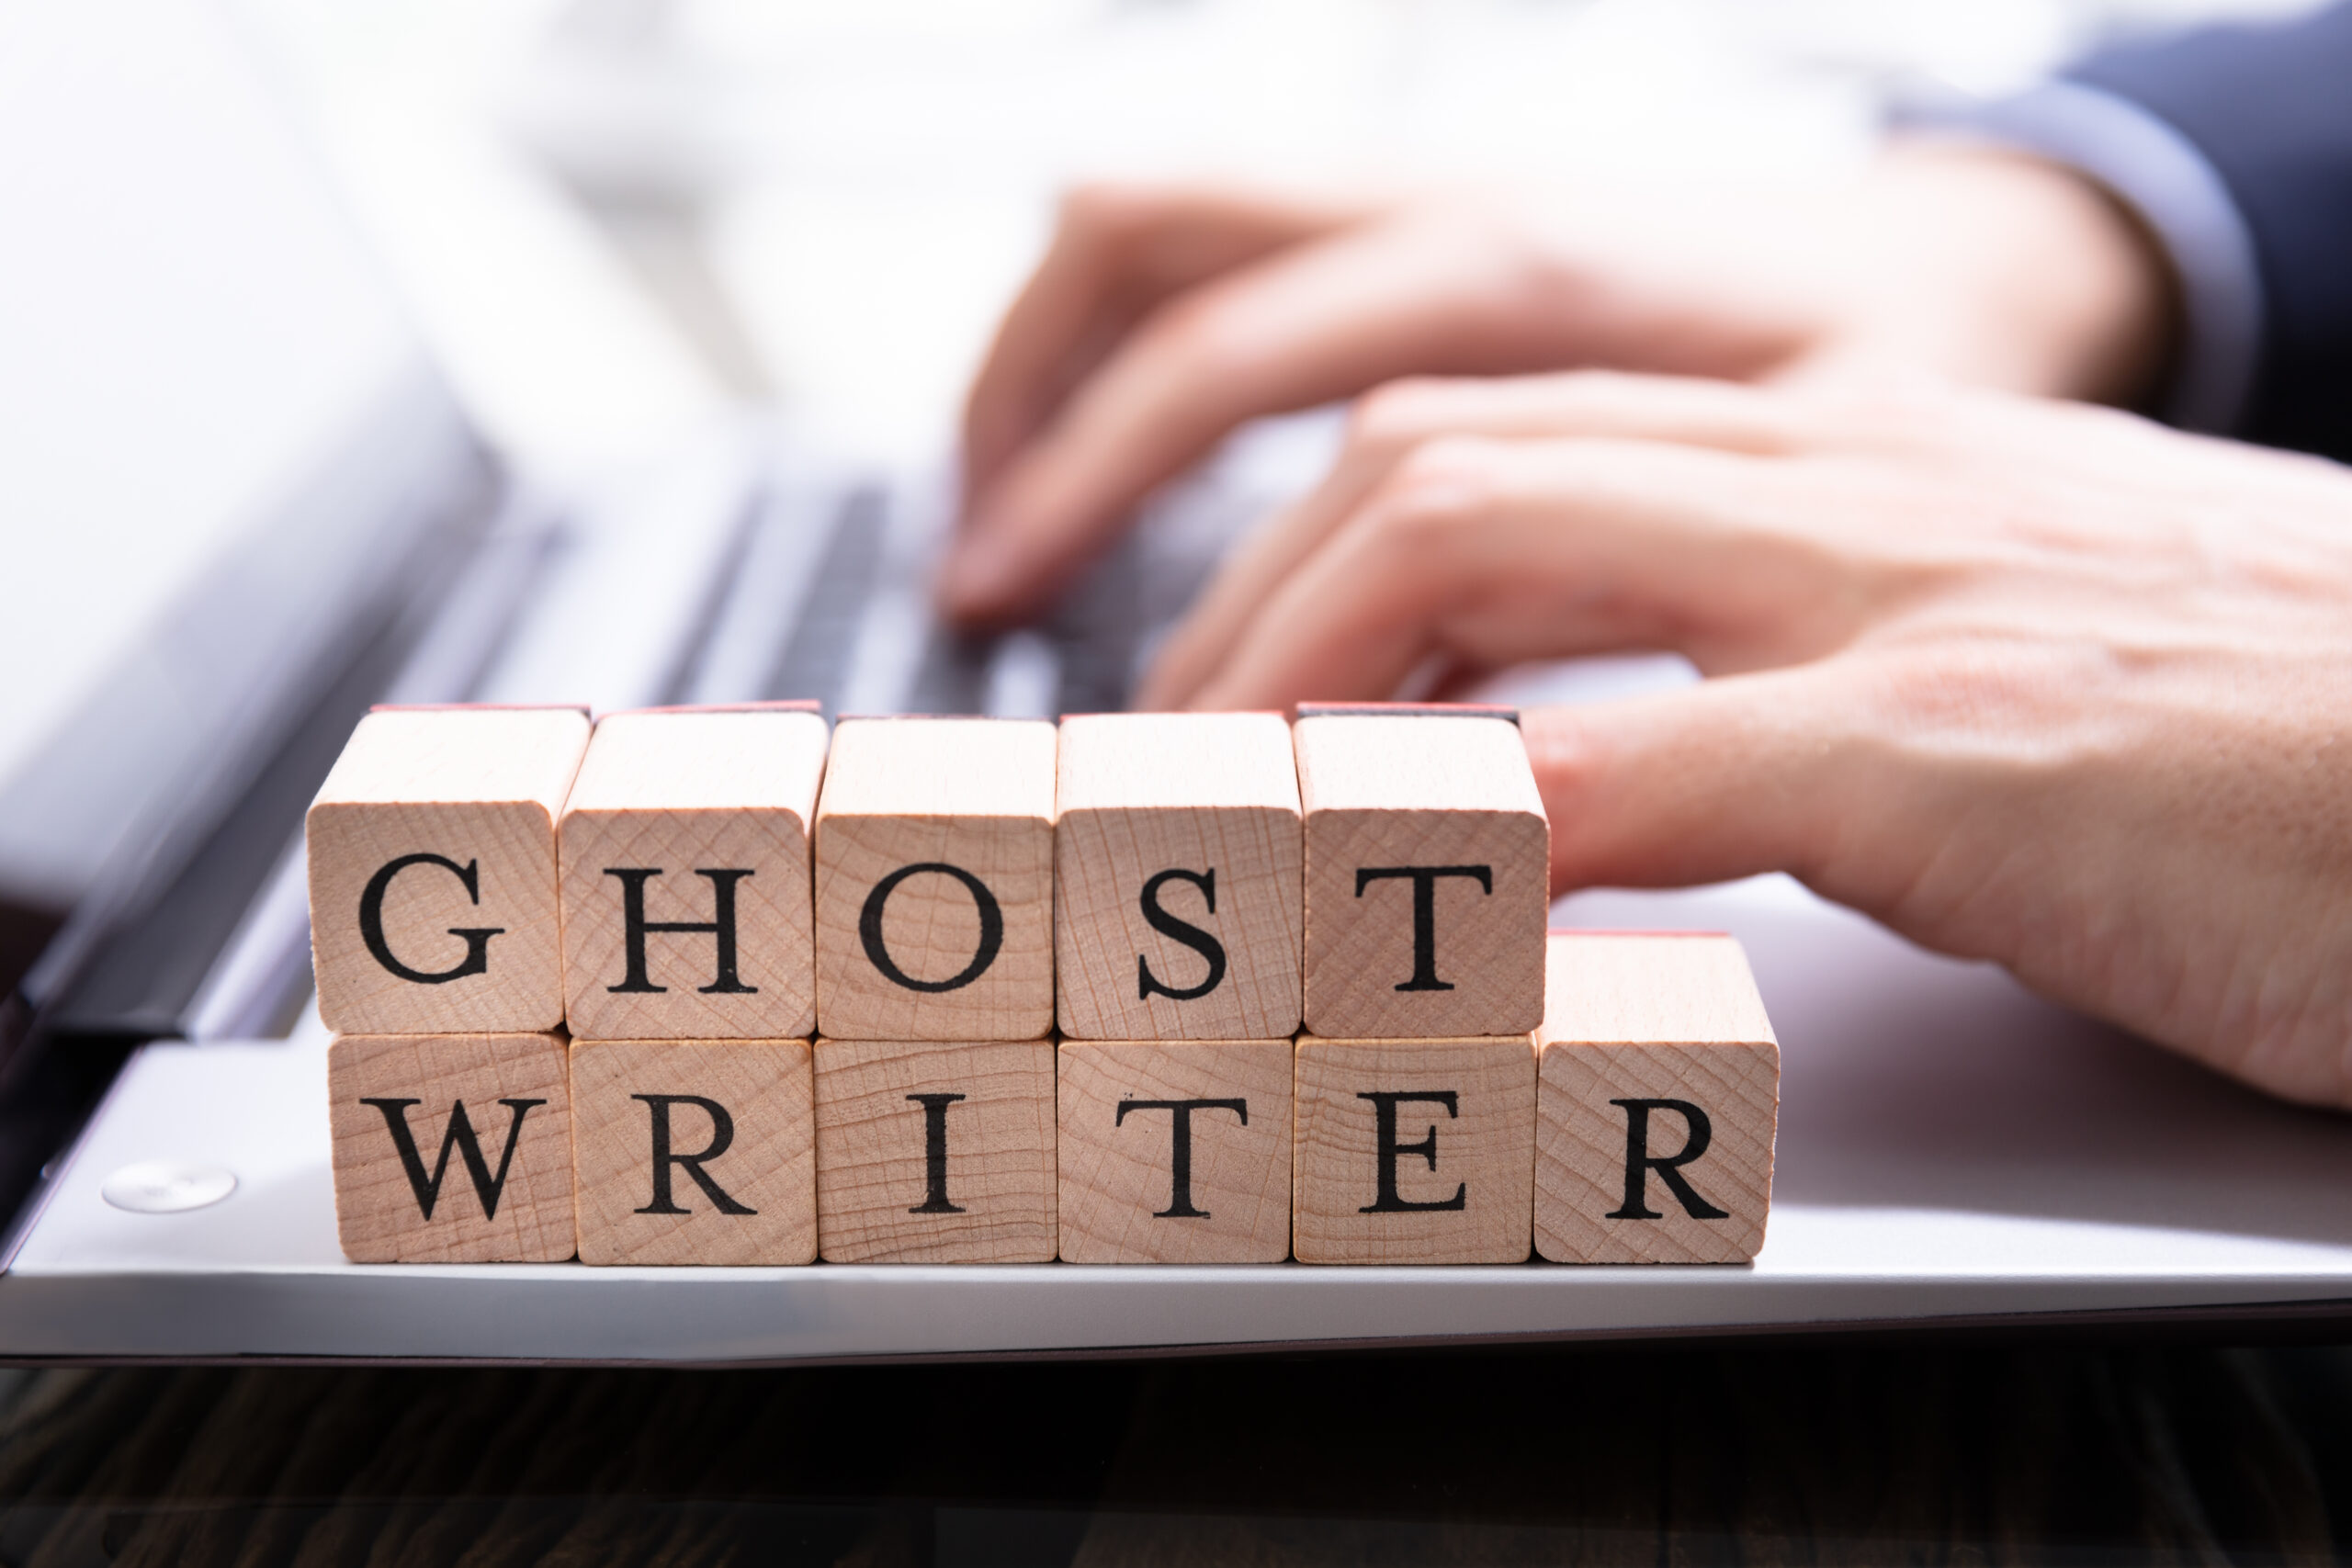 Ghostwriter Wooden Block On Computer Keyboard